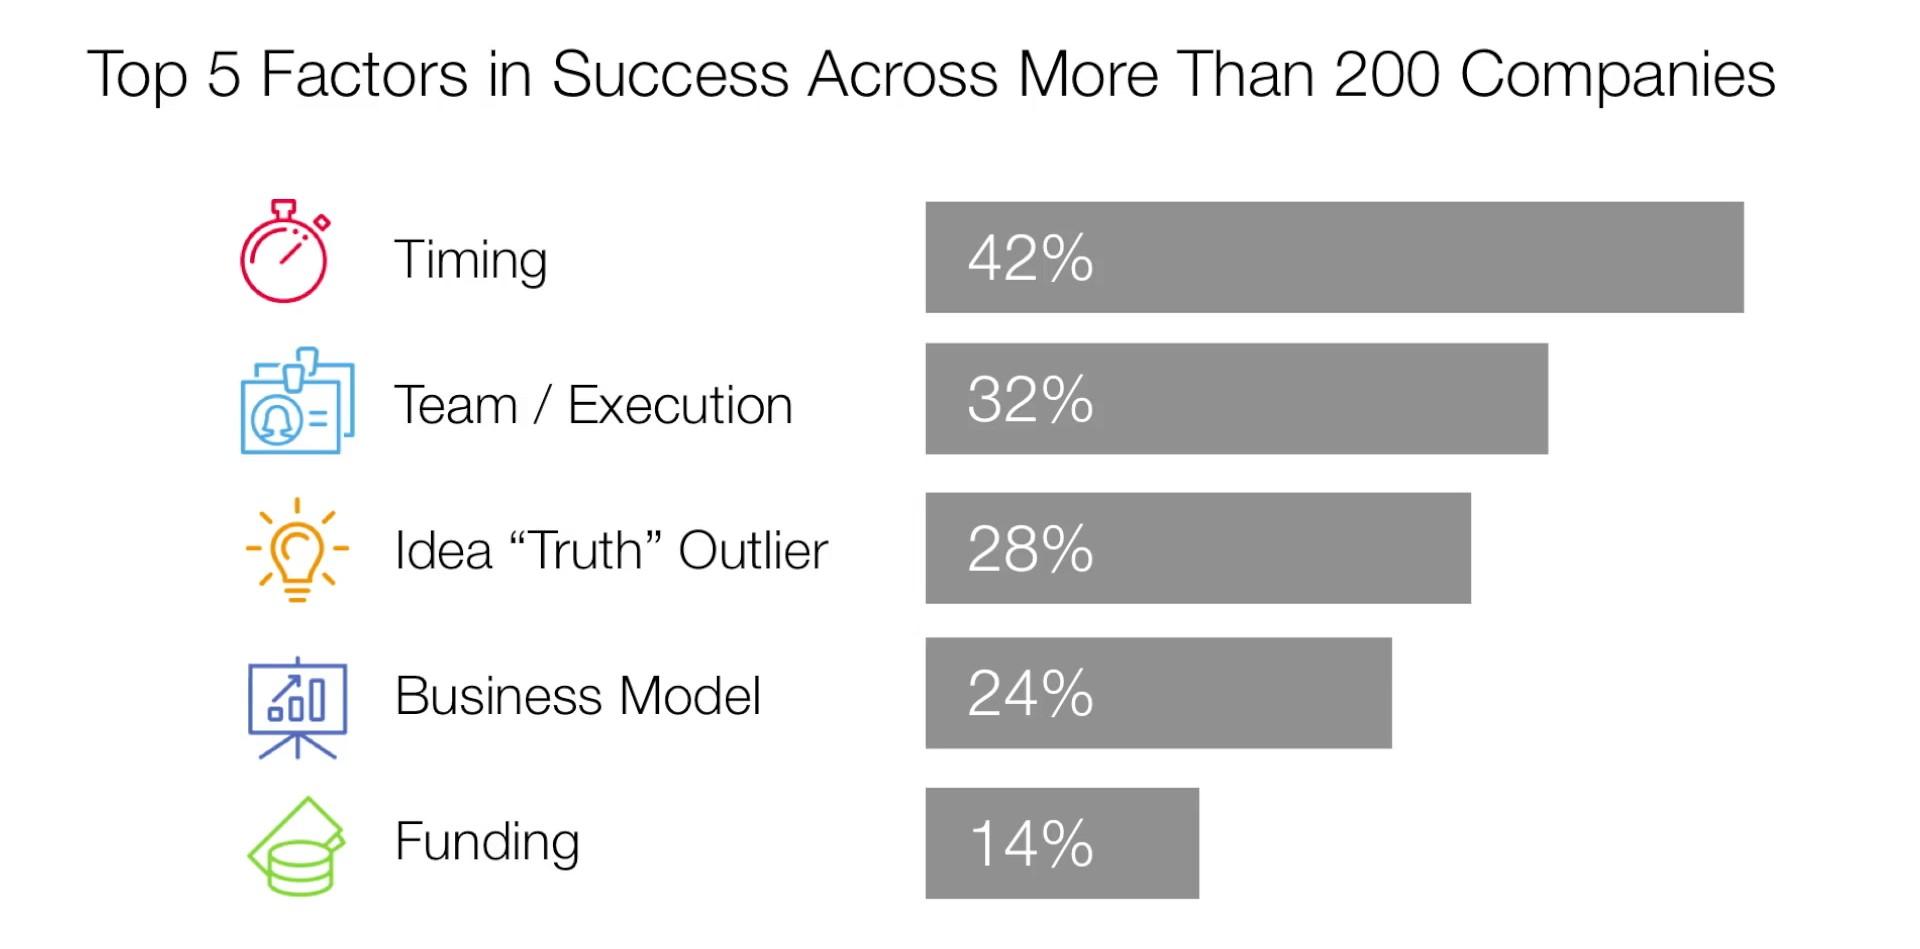 Top 5 Factors in Success Across More than 200 Companies